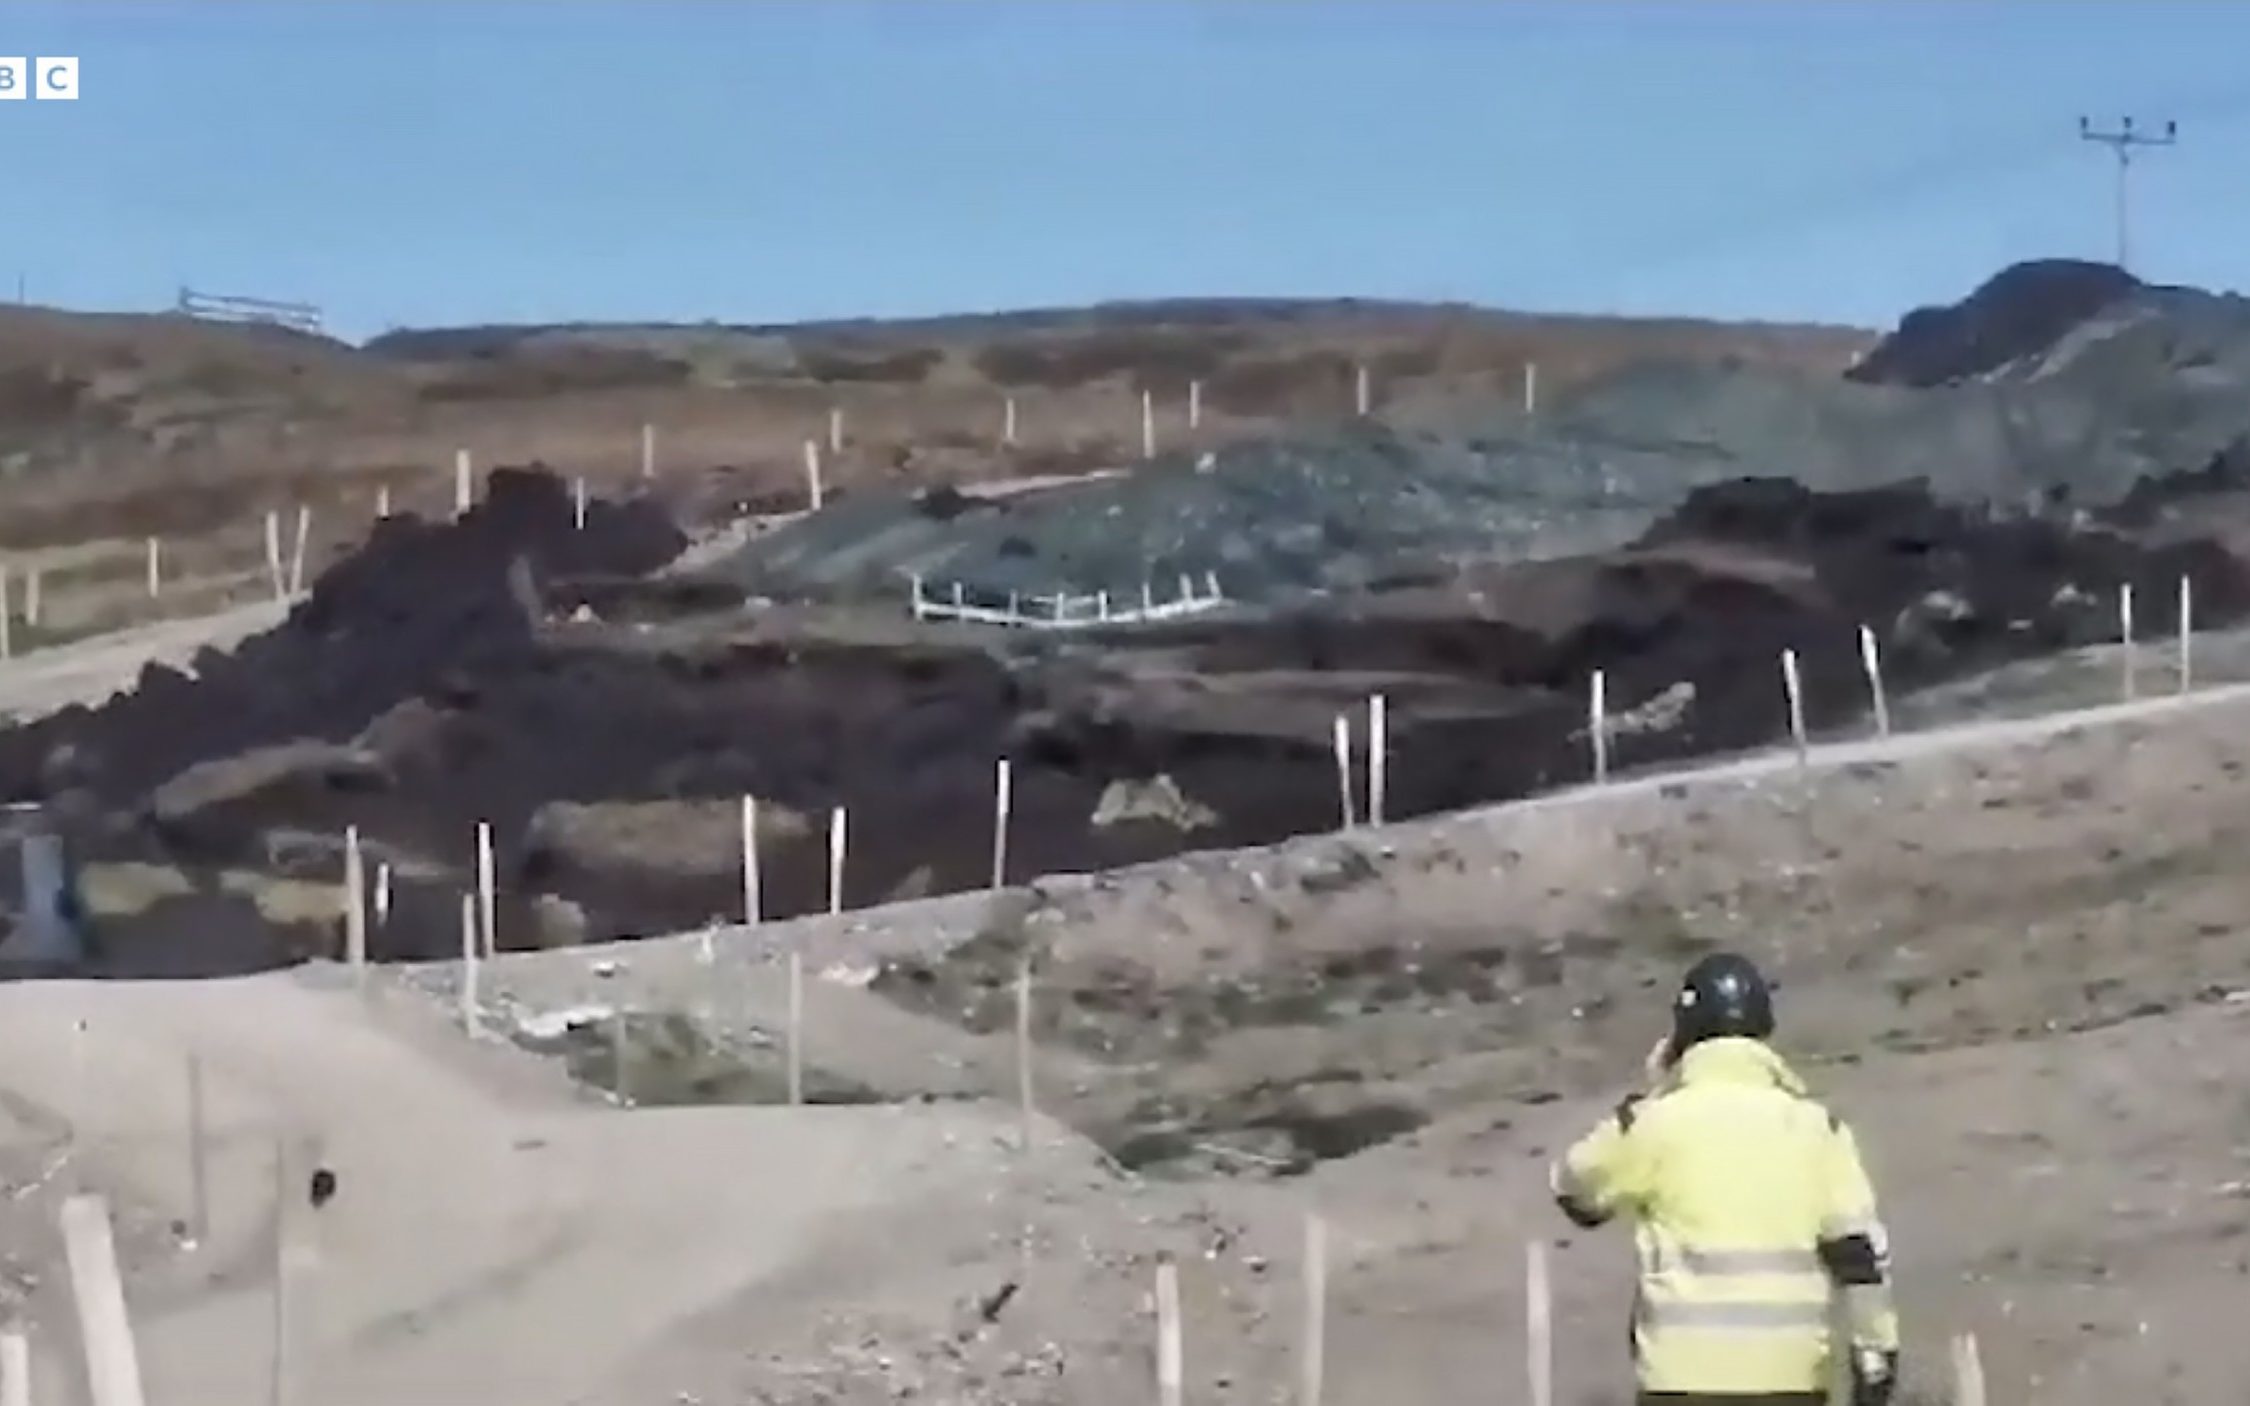 watch: tons of peat slide down hillside at shetland wind farm